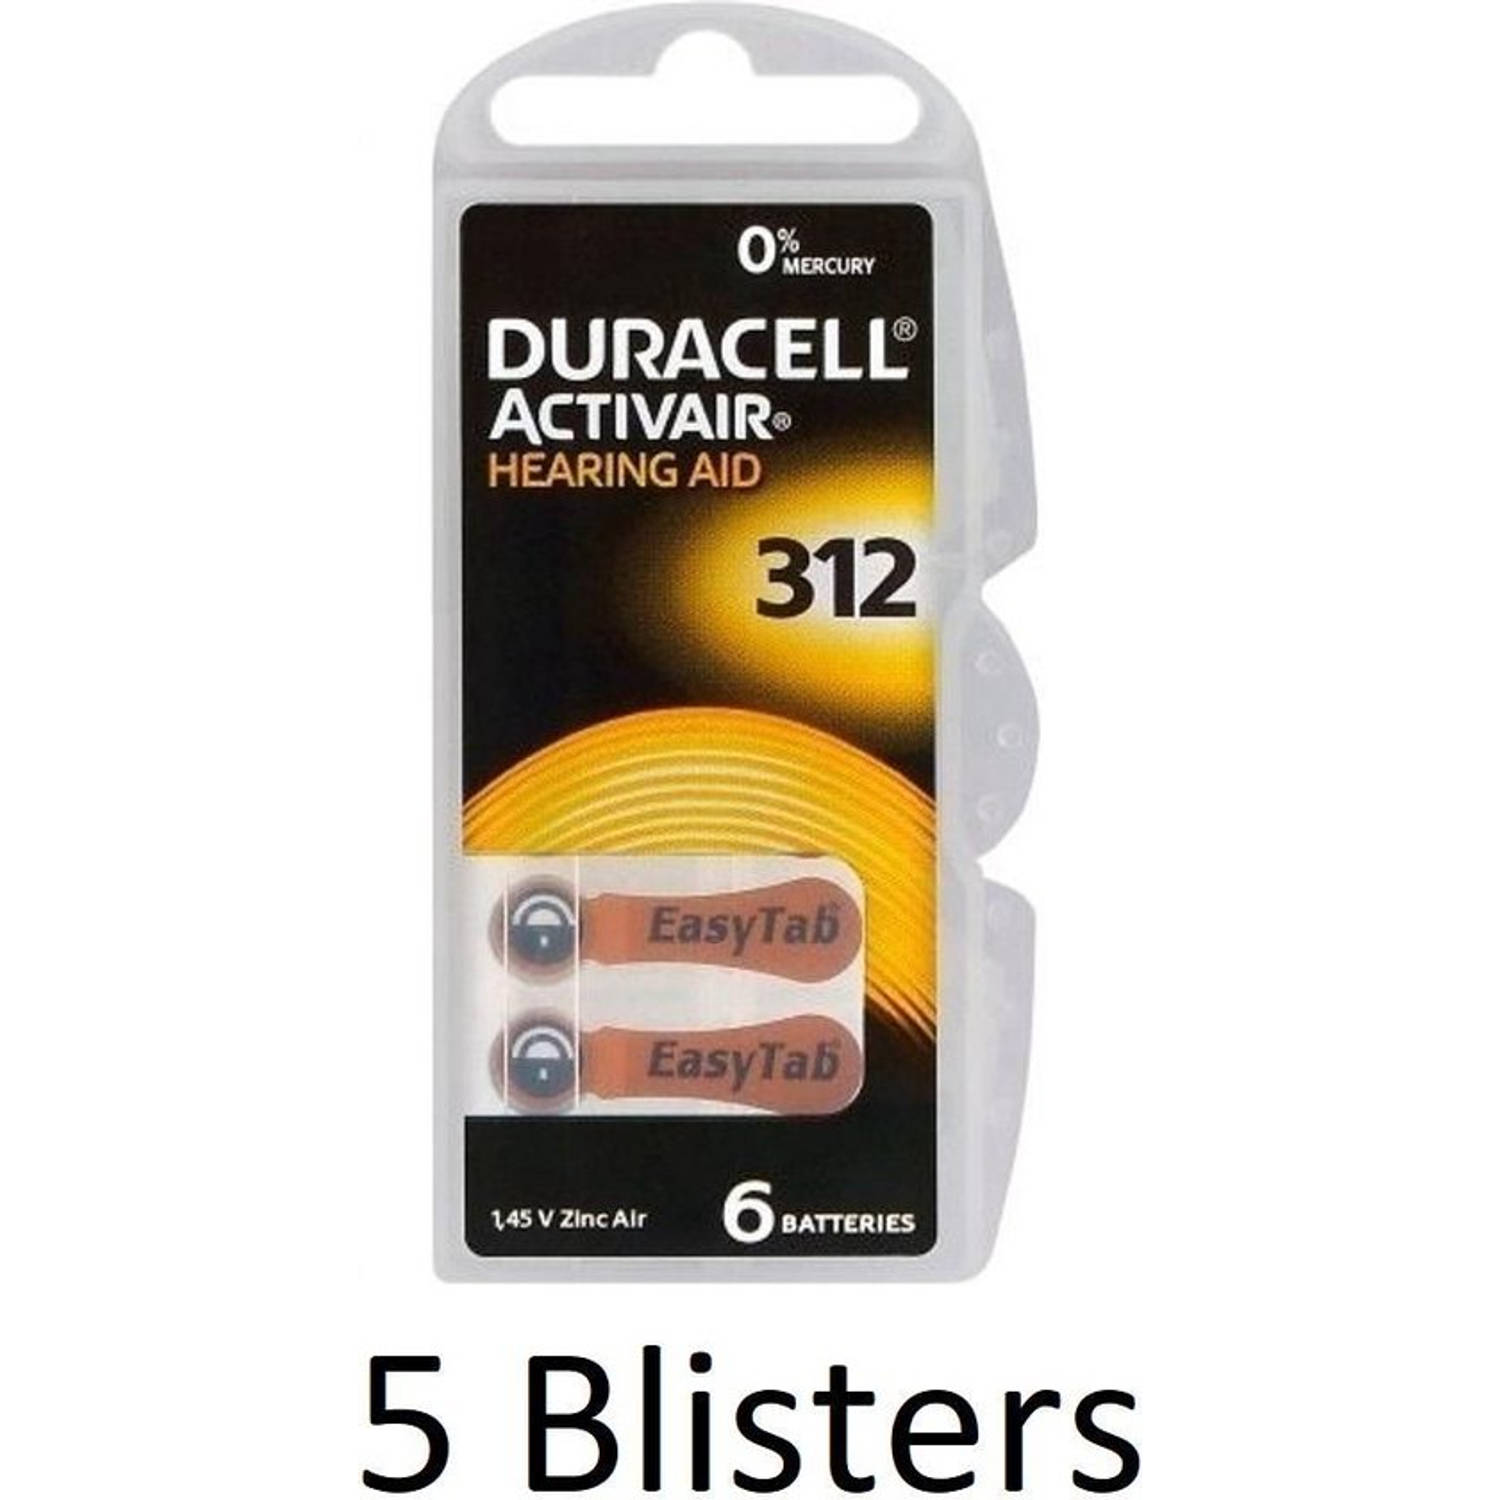 30 stuks (5 blisters a 6 st) Duracell DA312 hoorapparaat batterij